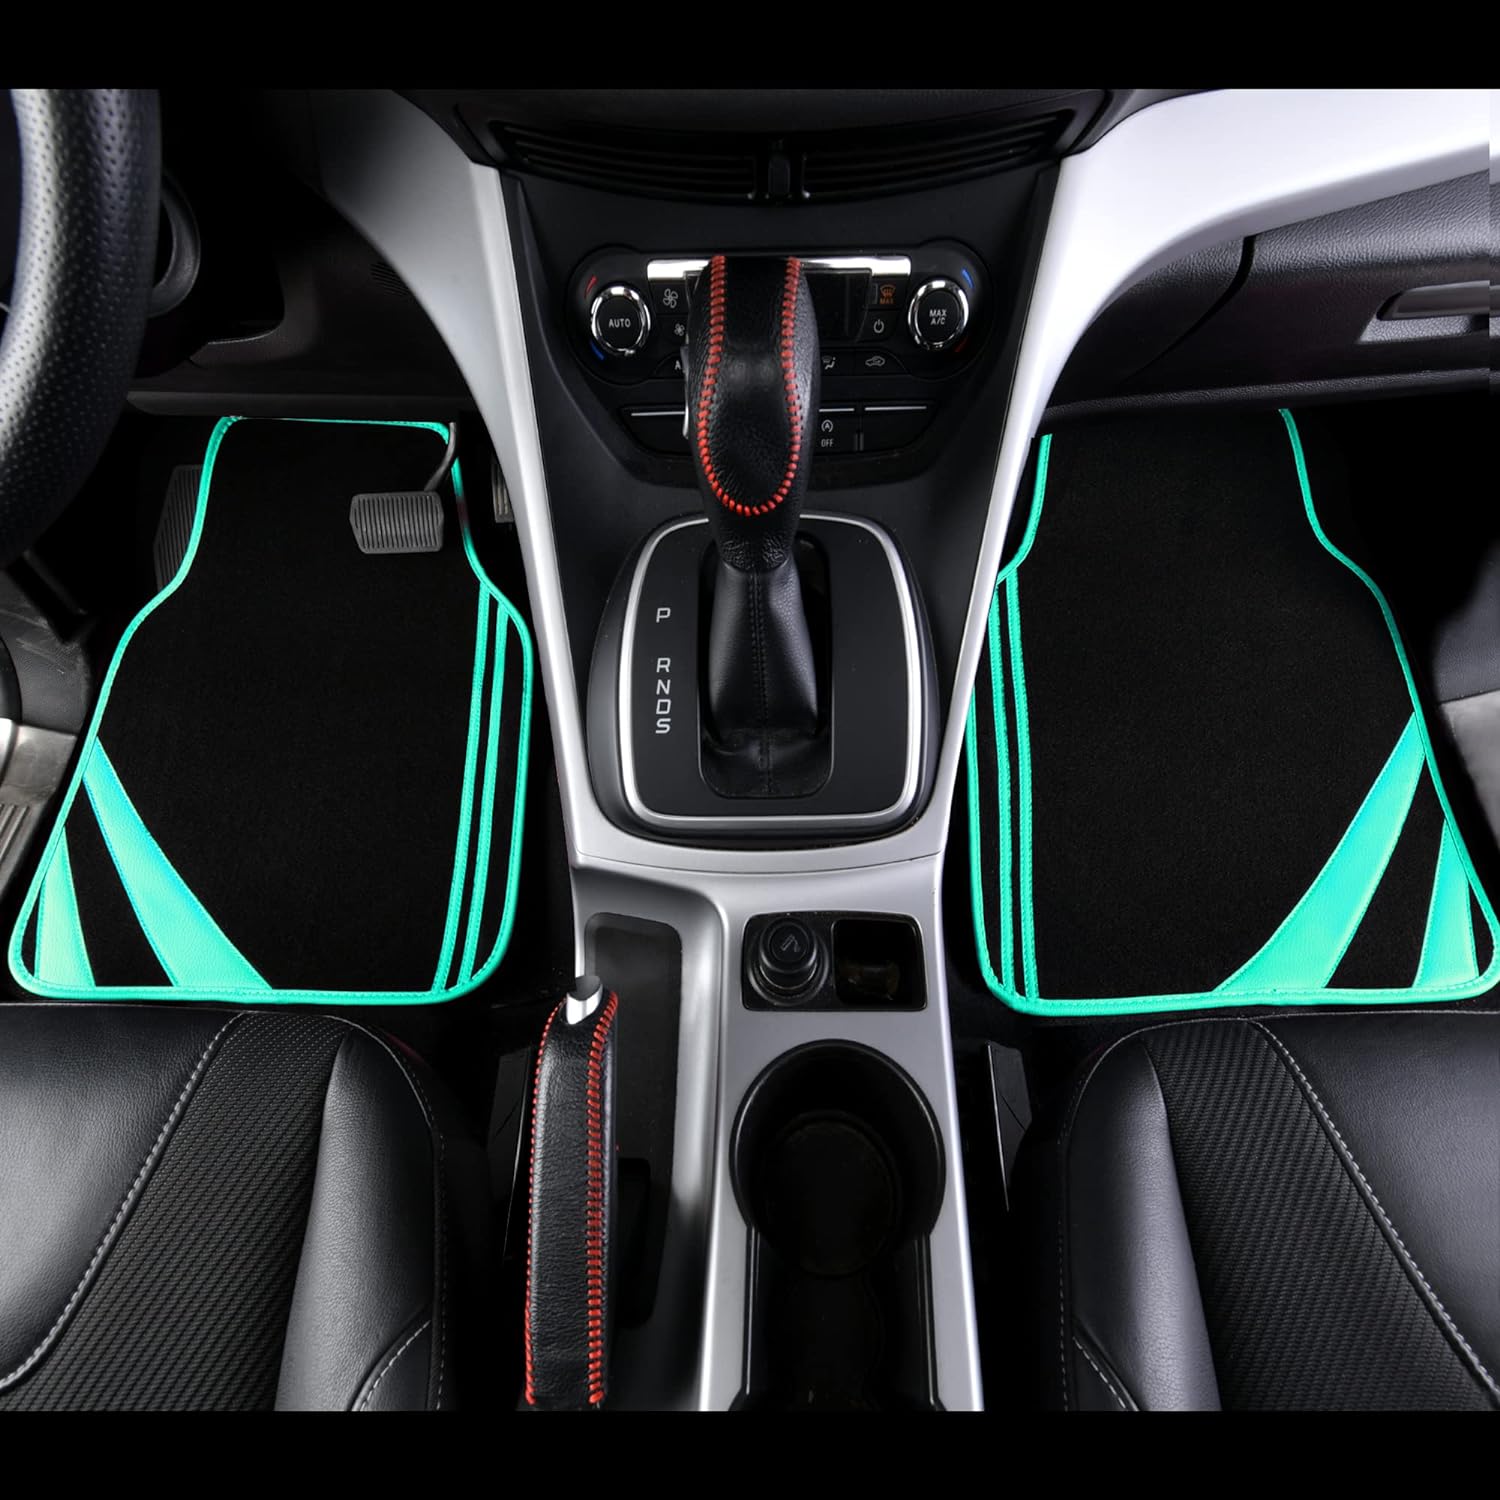 CAR PASS Beige Car Floor Mats, Edge Leather Car Mats with Double Stitch Line and Anti-Slip Backing Design, Fit 95% Automotive,SUVS,Sedan,Vans (Pure Beige)